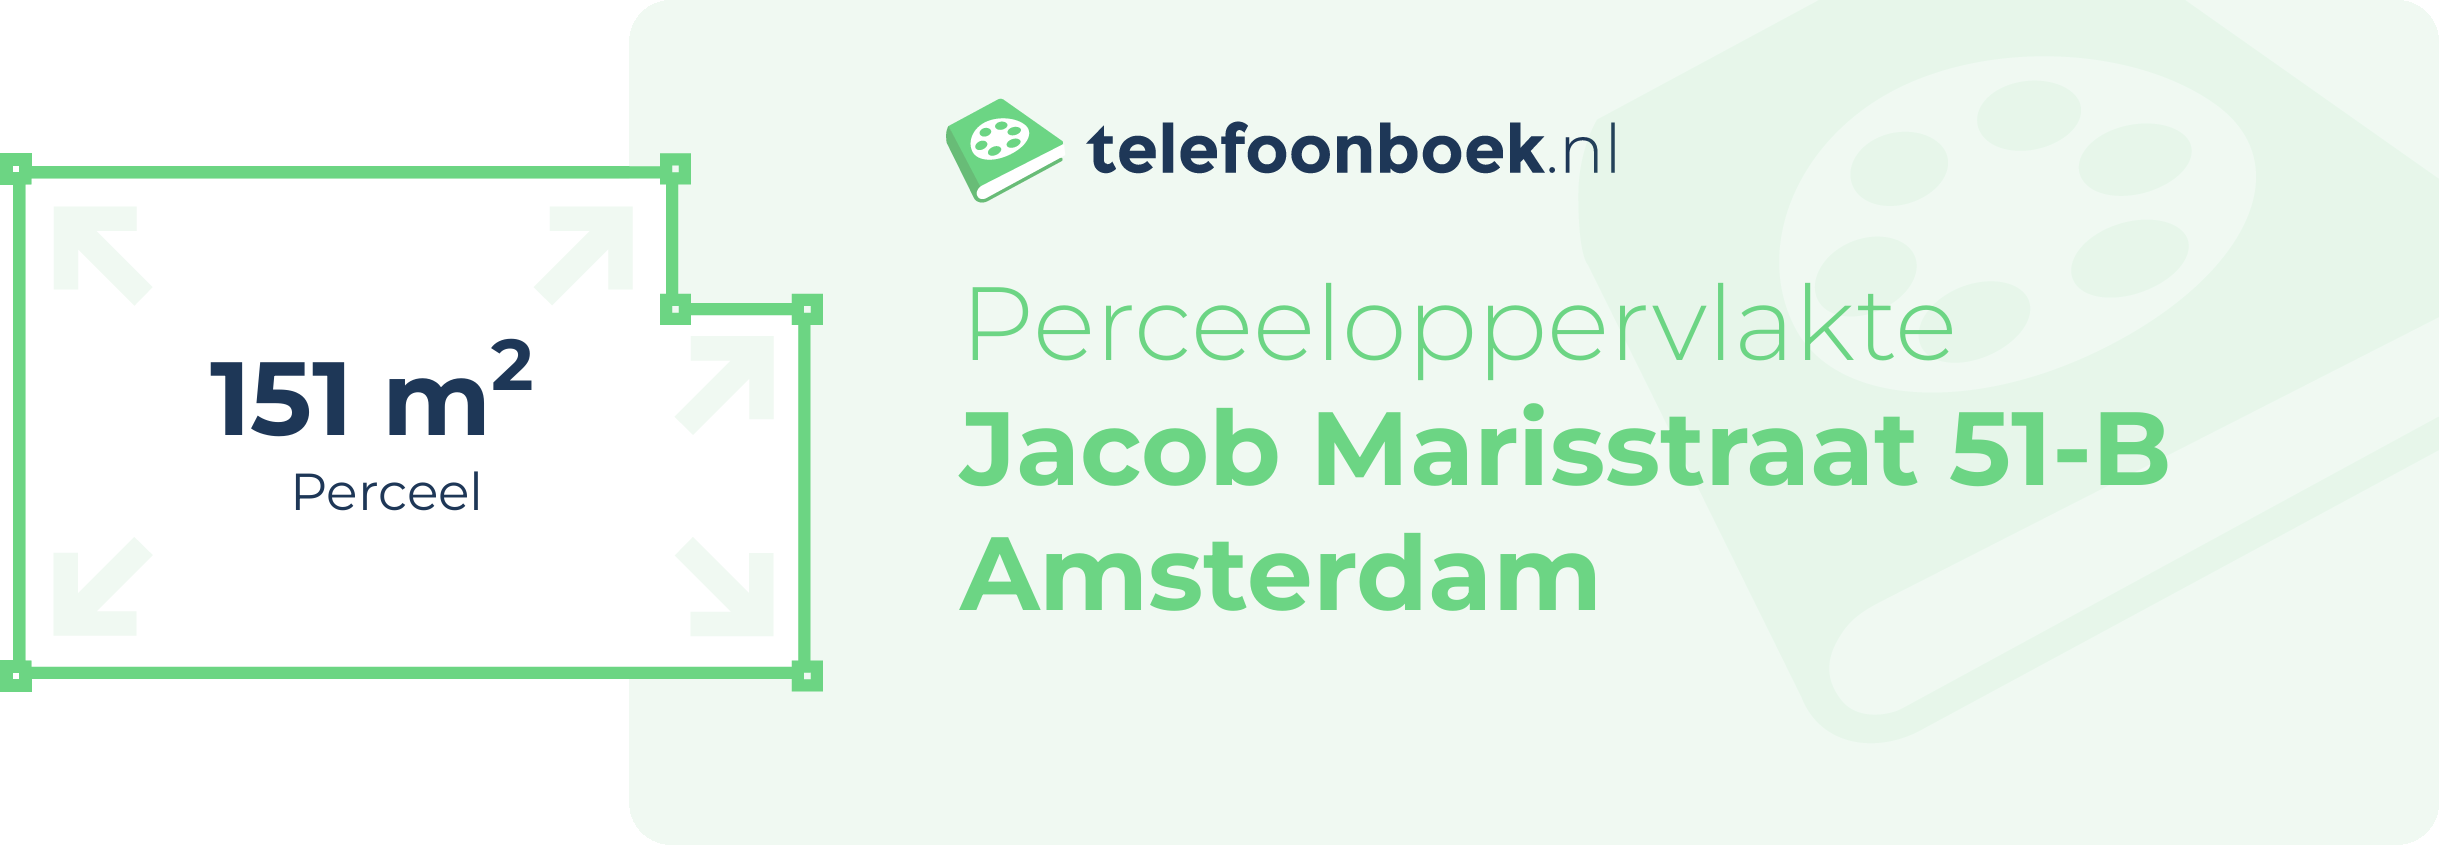 Perceeloppervlakte Jacob Marisstraat 51-B Amsterdam